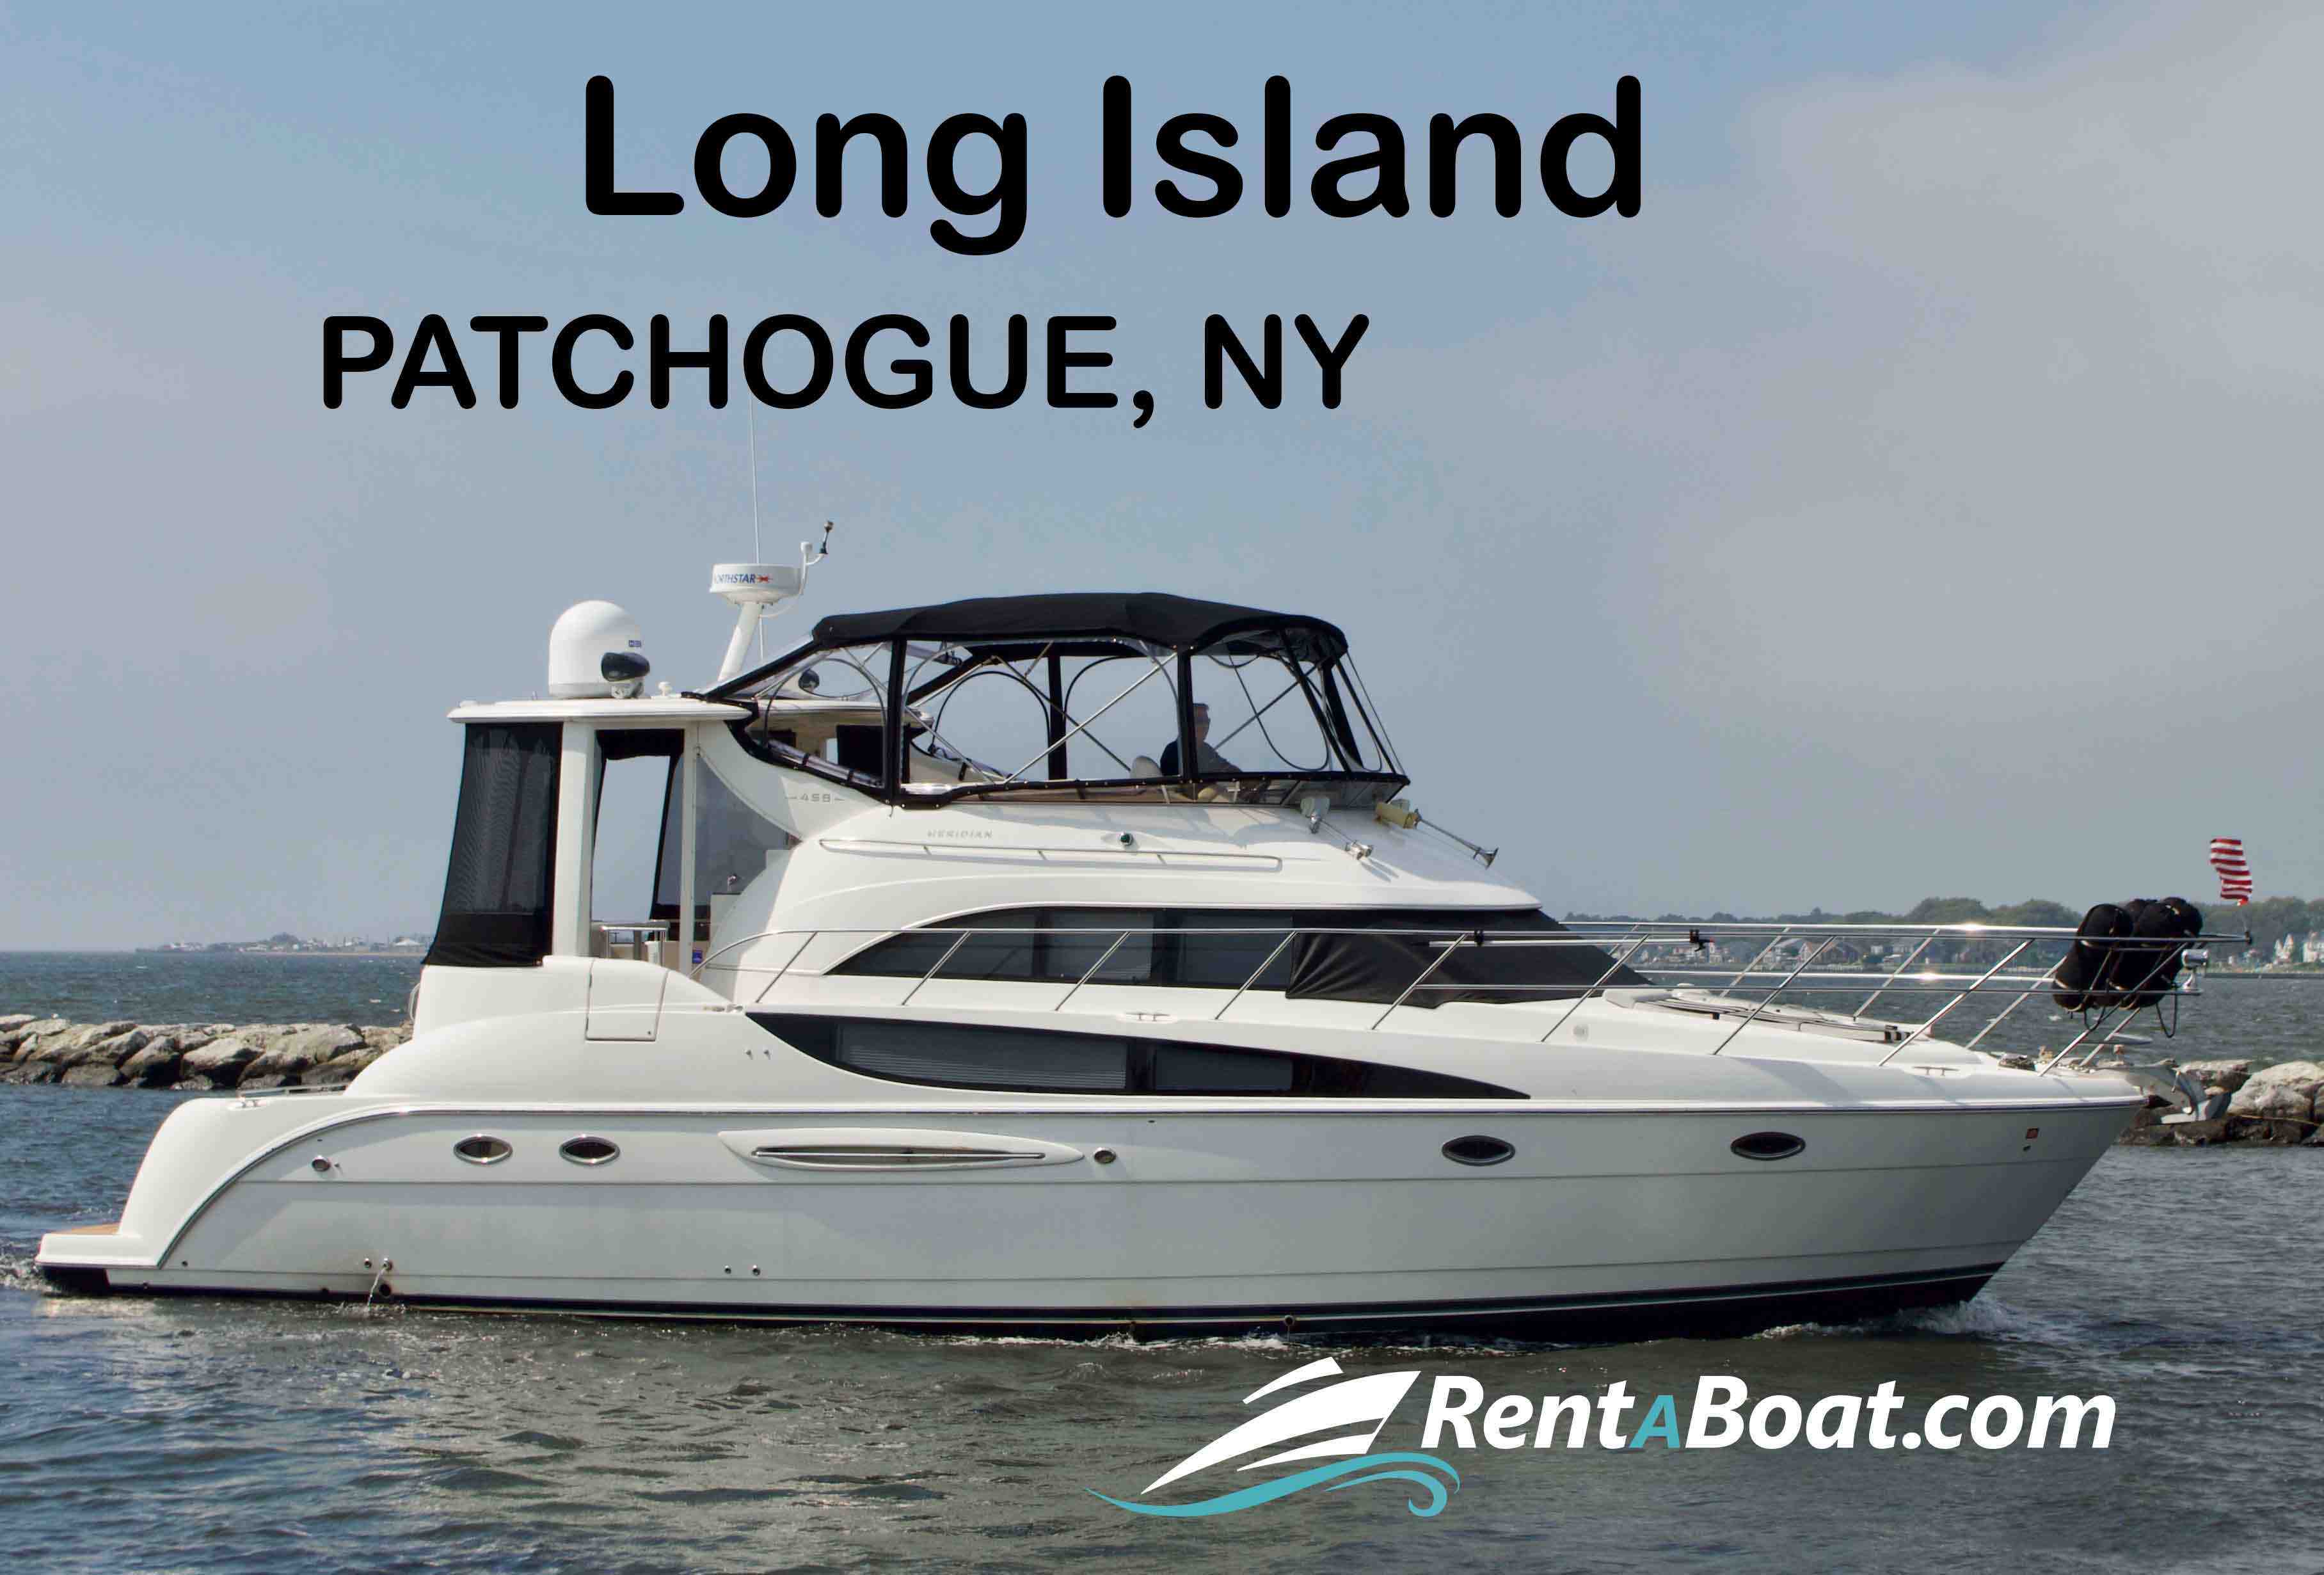 459 Motor Yacht Rental boat rentals New York PATCHOGUE, NY New York  Meridian Motor Yacht 2006 48 